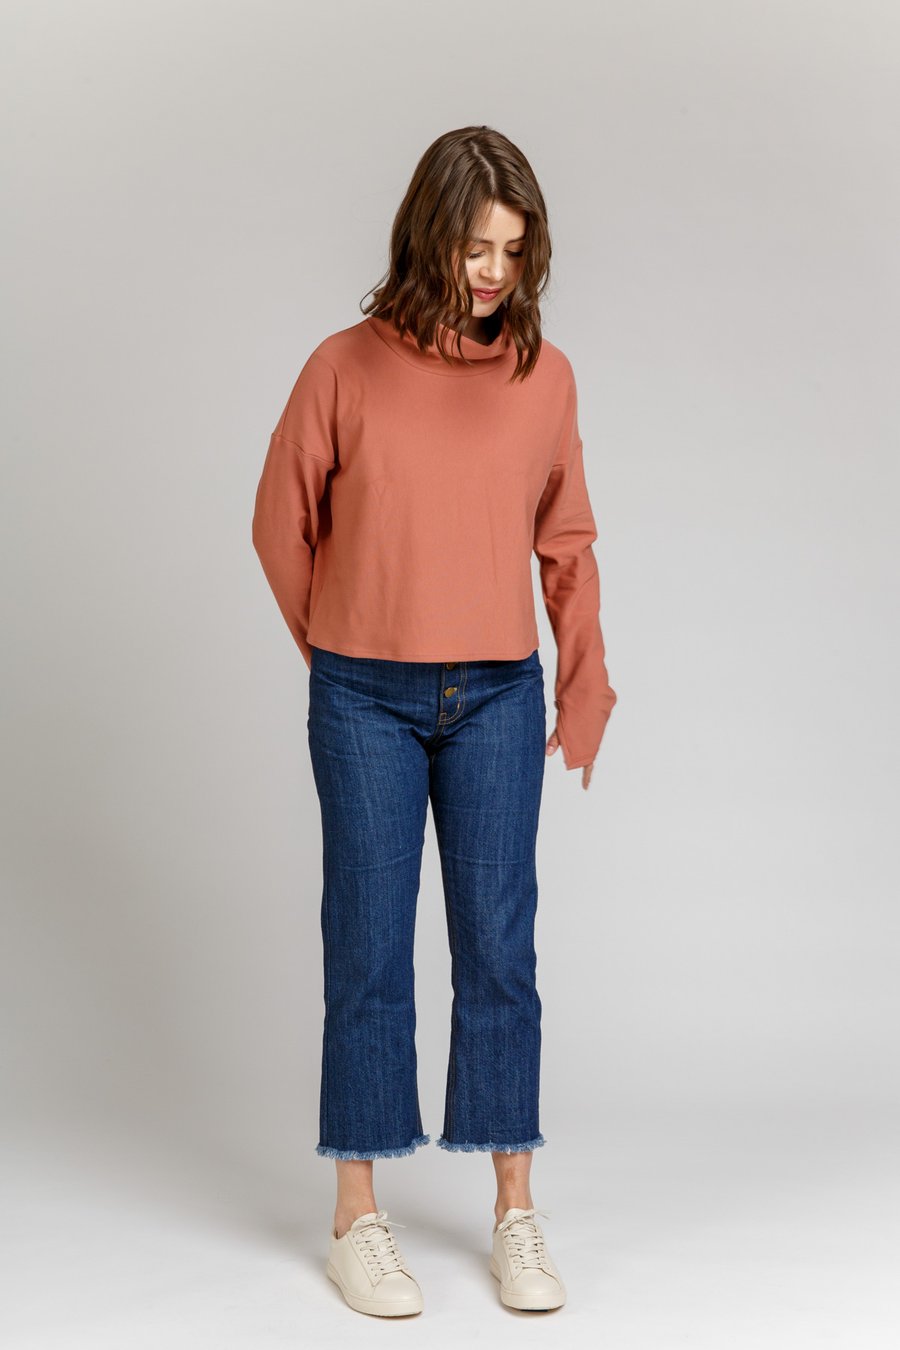 Jarrah Sweater Set by Megan Nielsen Patterns – Sew Yarn Crafty & Studio